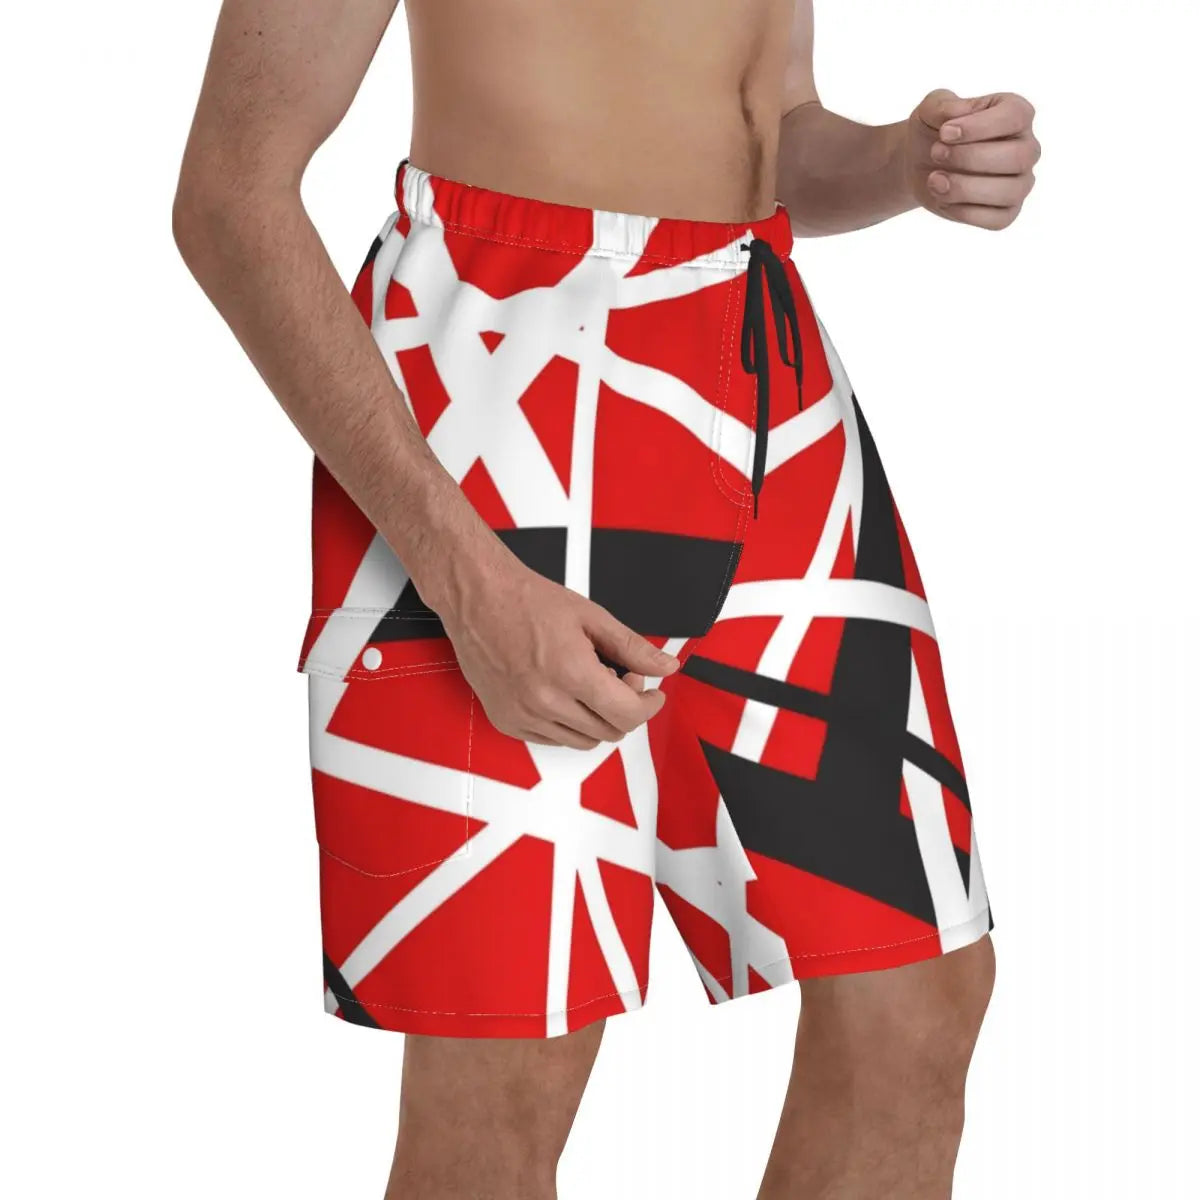 Van Halen Board Shorts EVH 5150 STRIPES Pattern Beach Shorts Males Printing Plus Size Swim Trunks Gift Idea - Premium swimwear from Lizard Vigilante - Just $24.99! Shop now at Lizard Vigilante